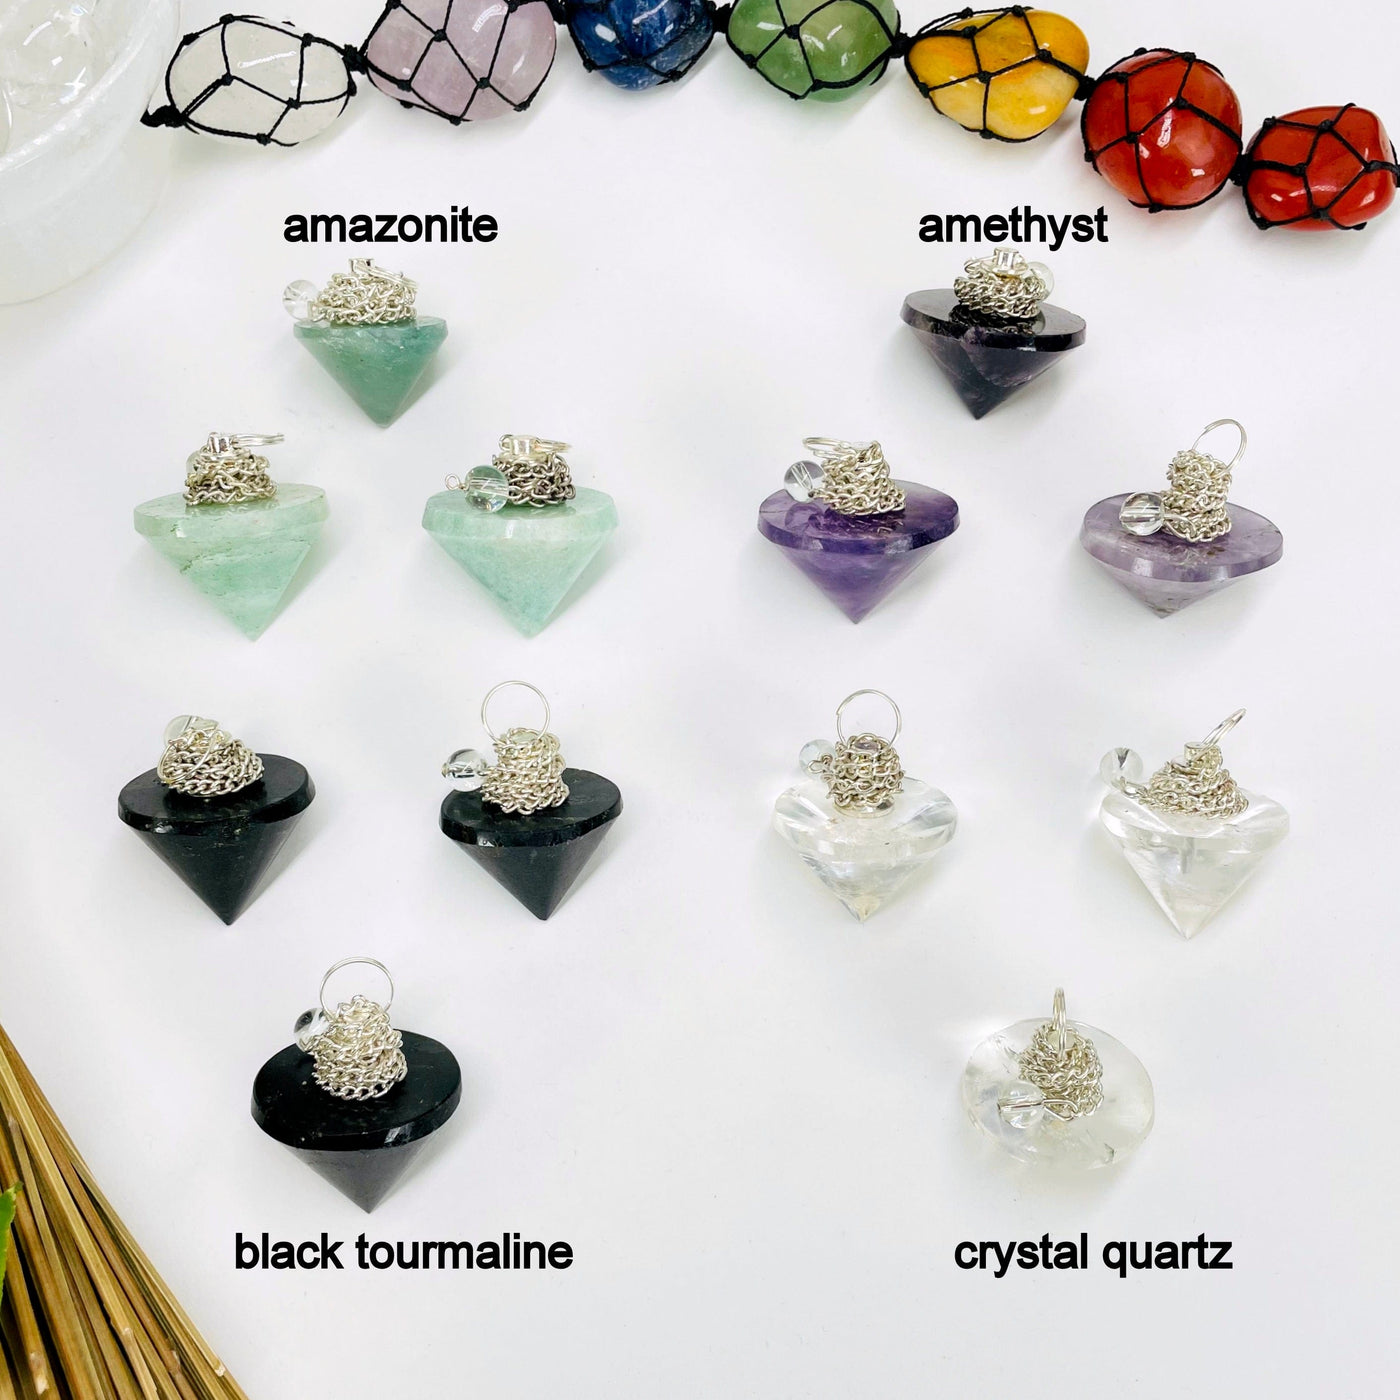 three amazonite, amethyst, black tourmaline, and crystal quartz pendulum pendants on white background for possible variations